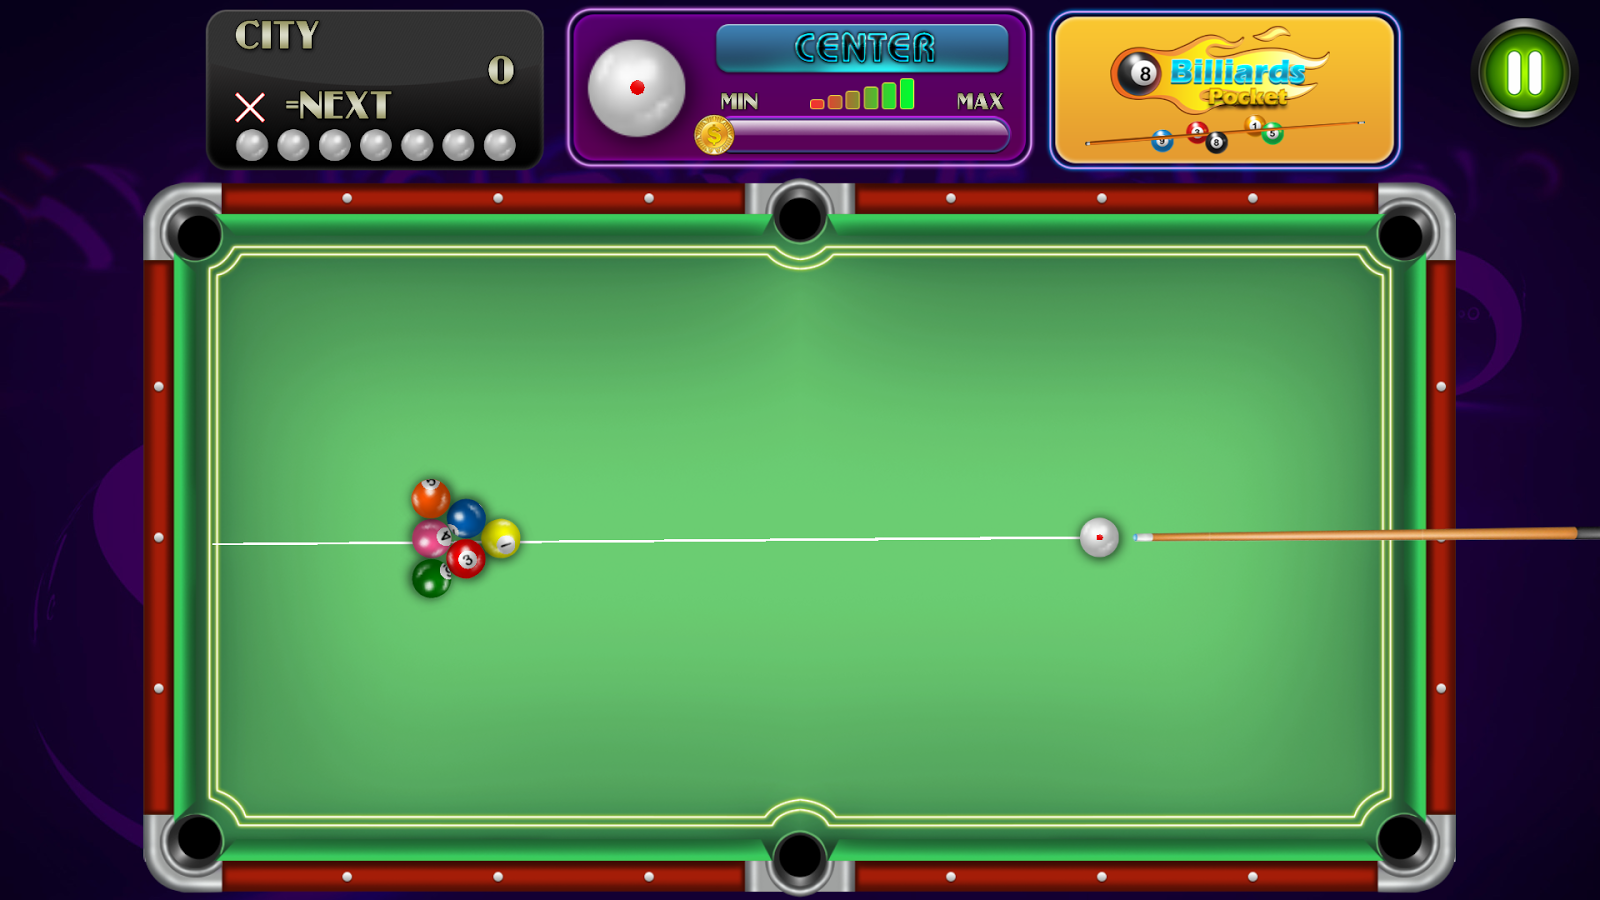 Billiards Pocket 1.1 APK Download - Android Sports Games - 